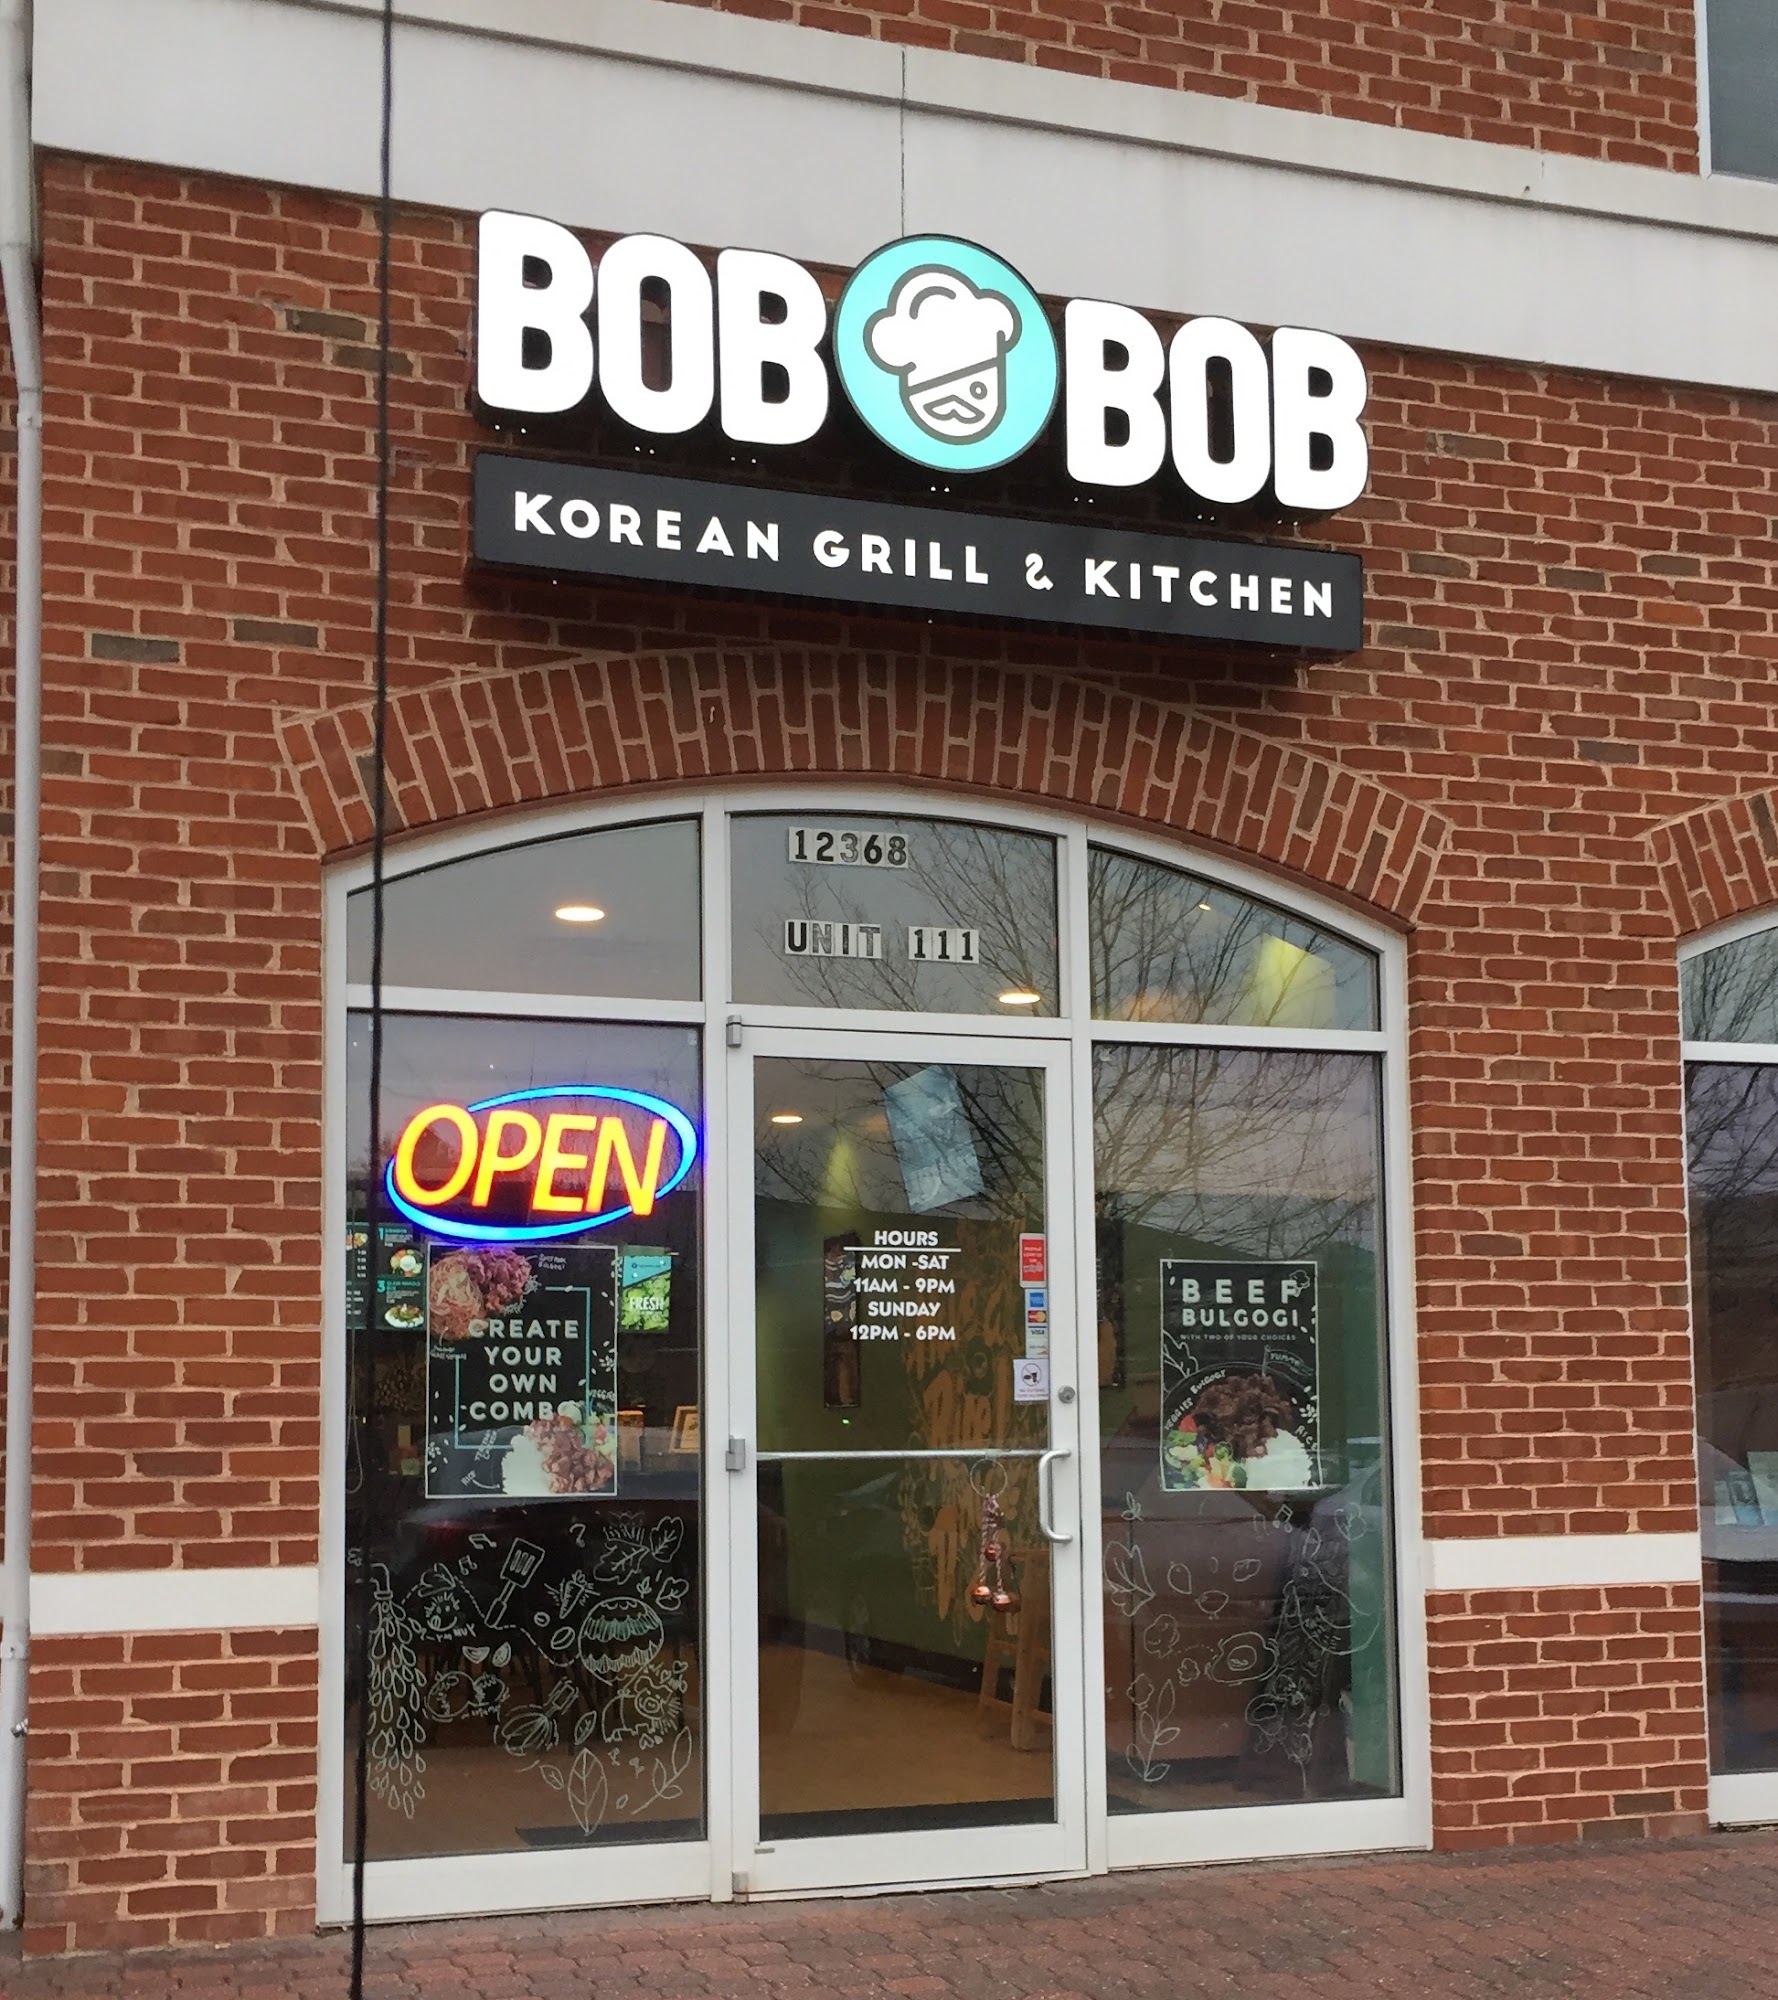 Bob Bob Korean grill and kitchen